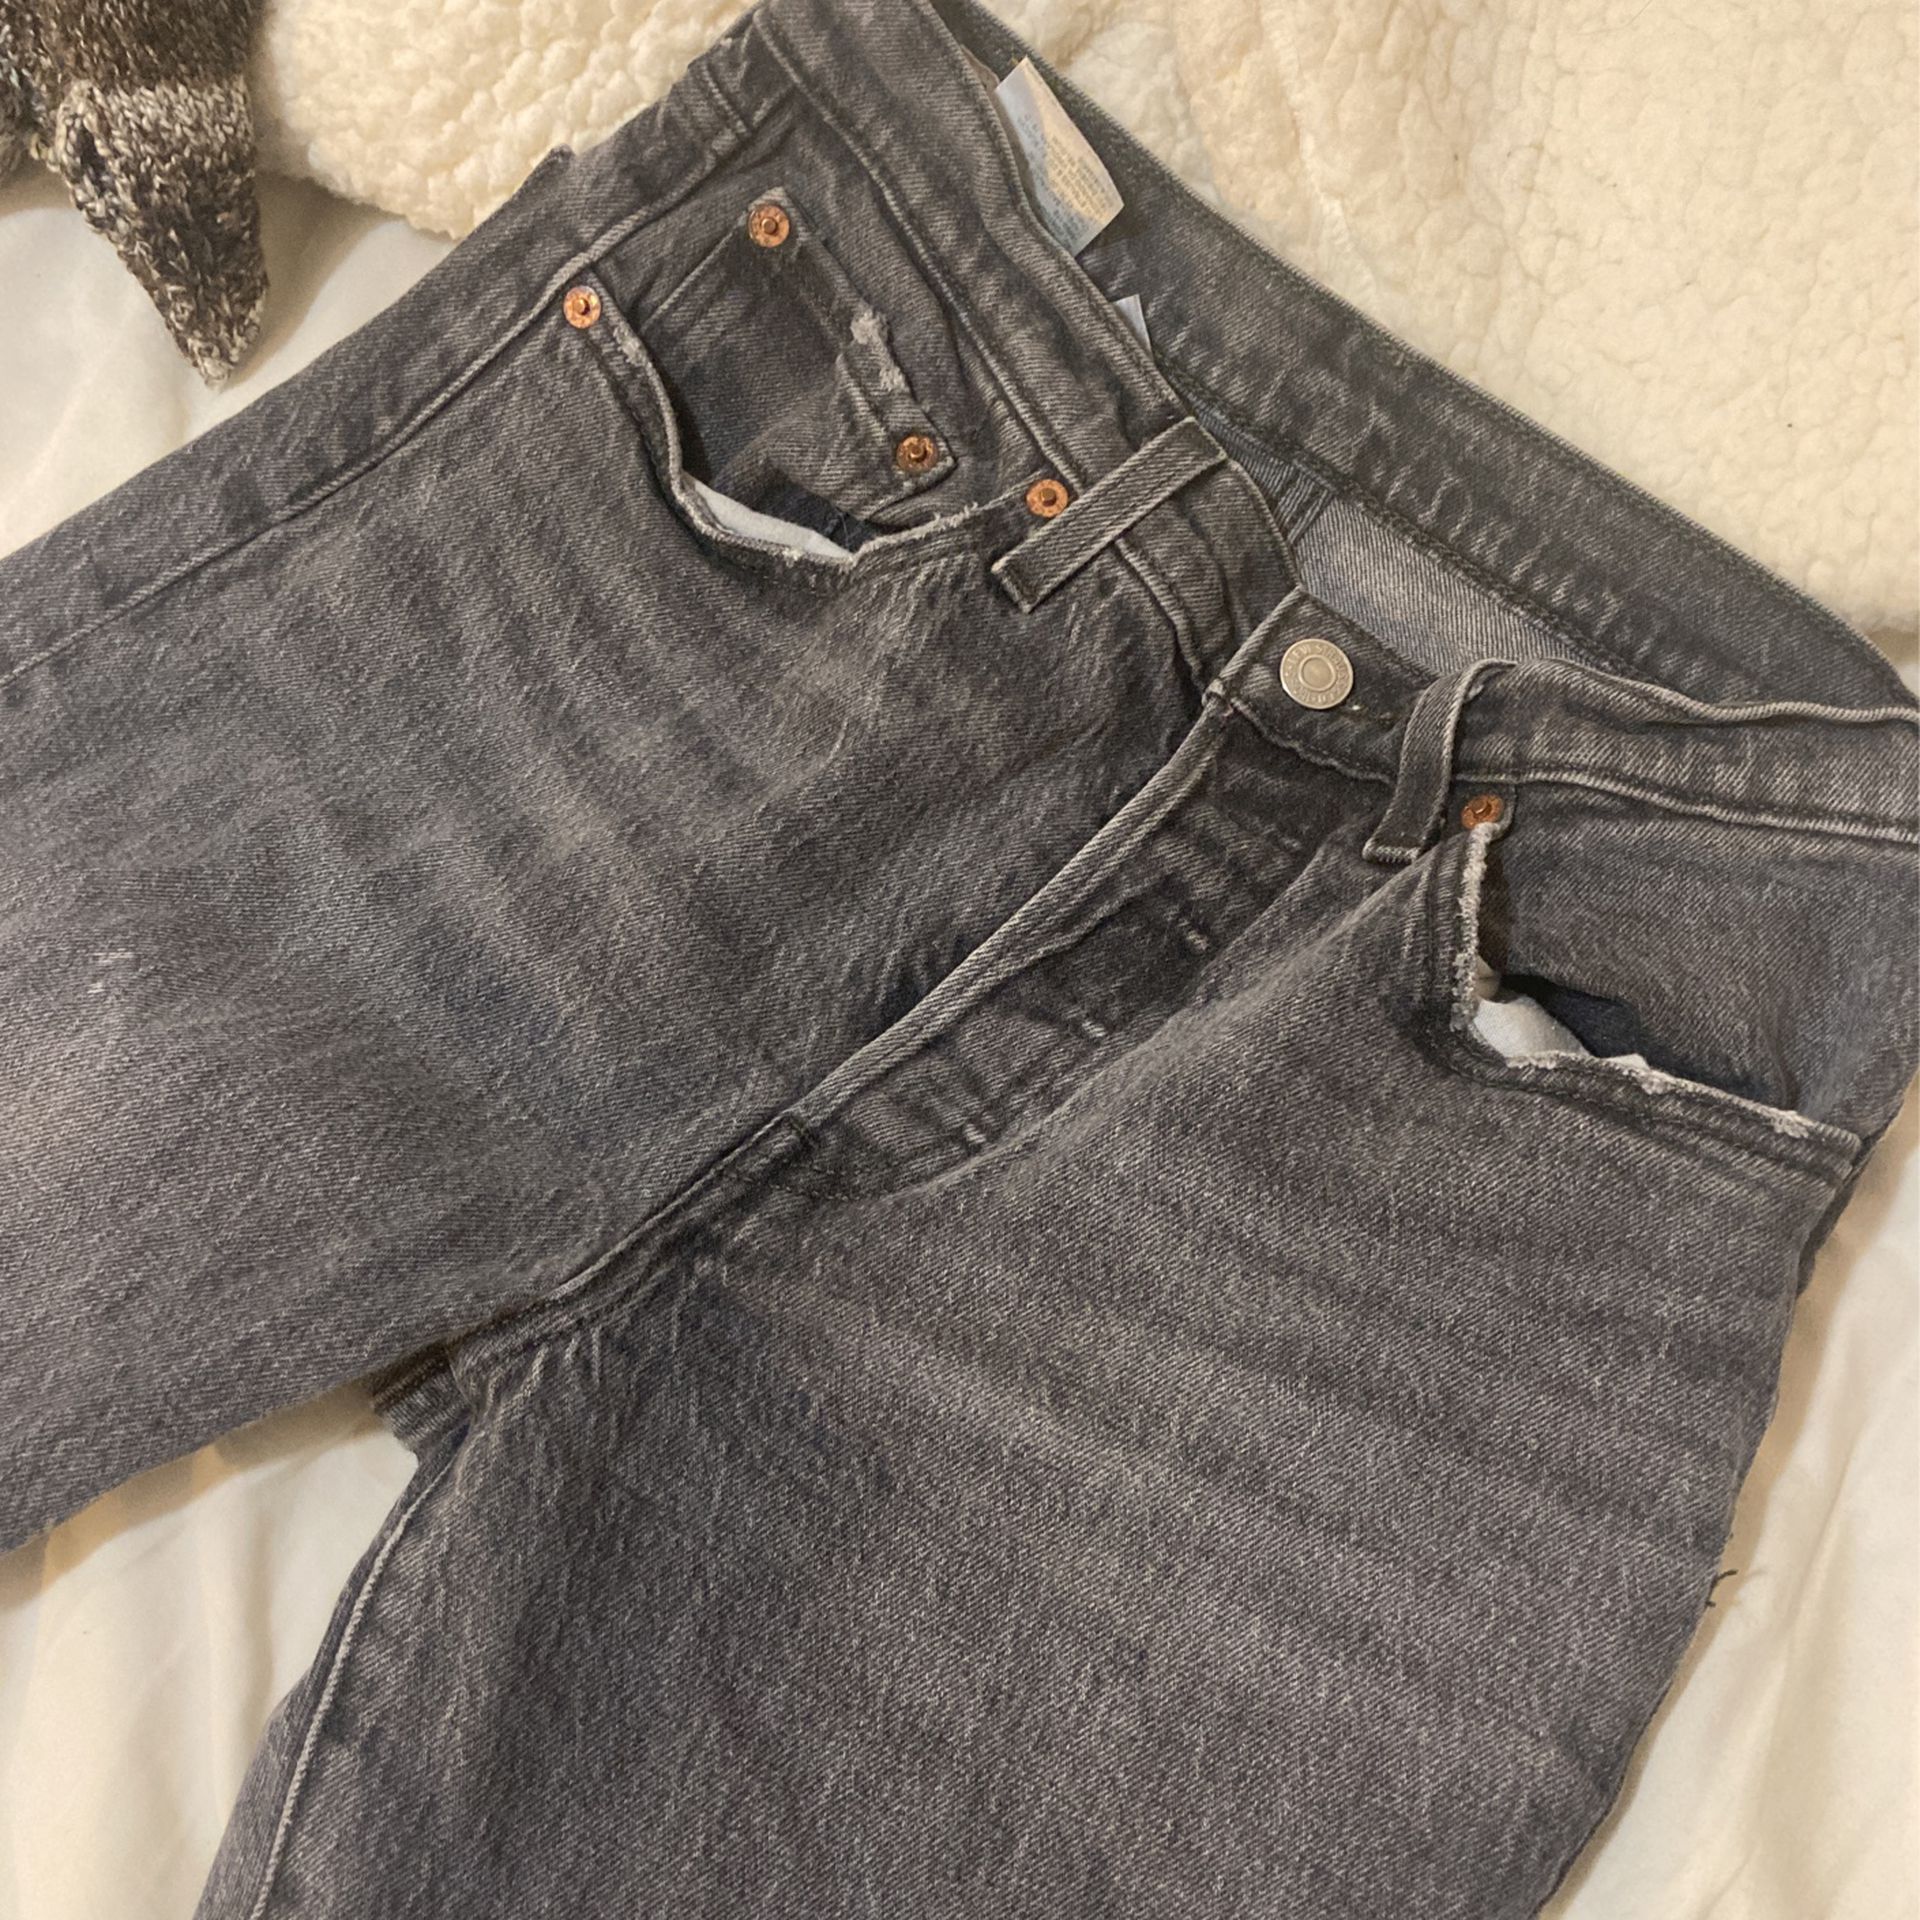 Black Levi Jeans 501 W26 L32